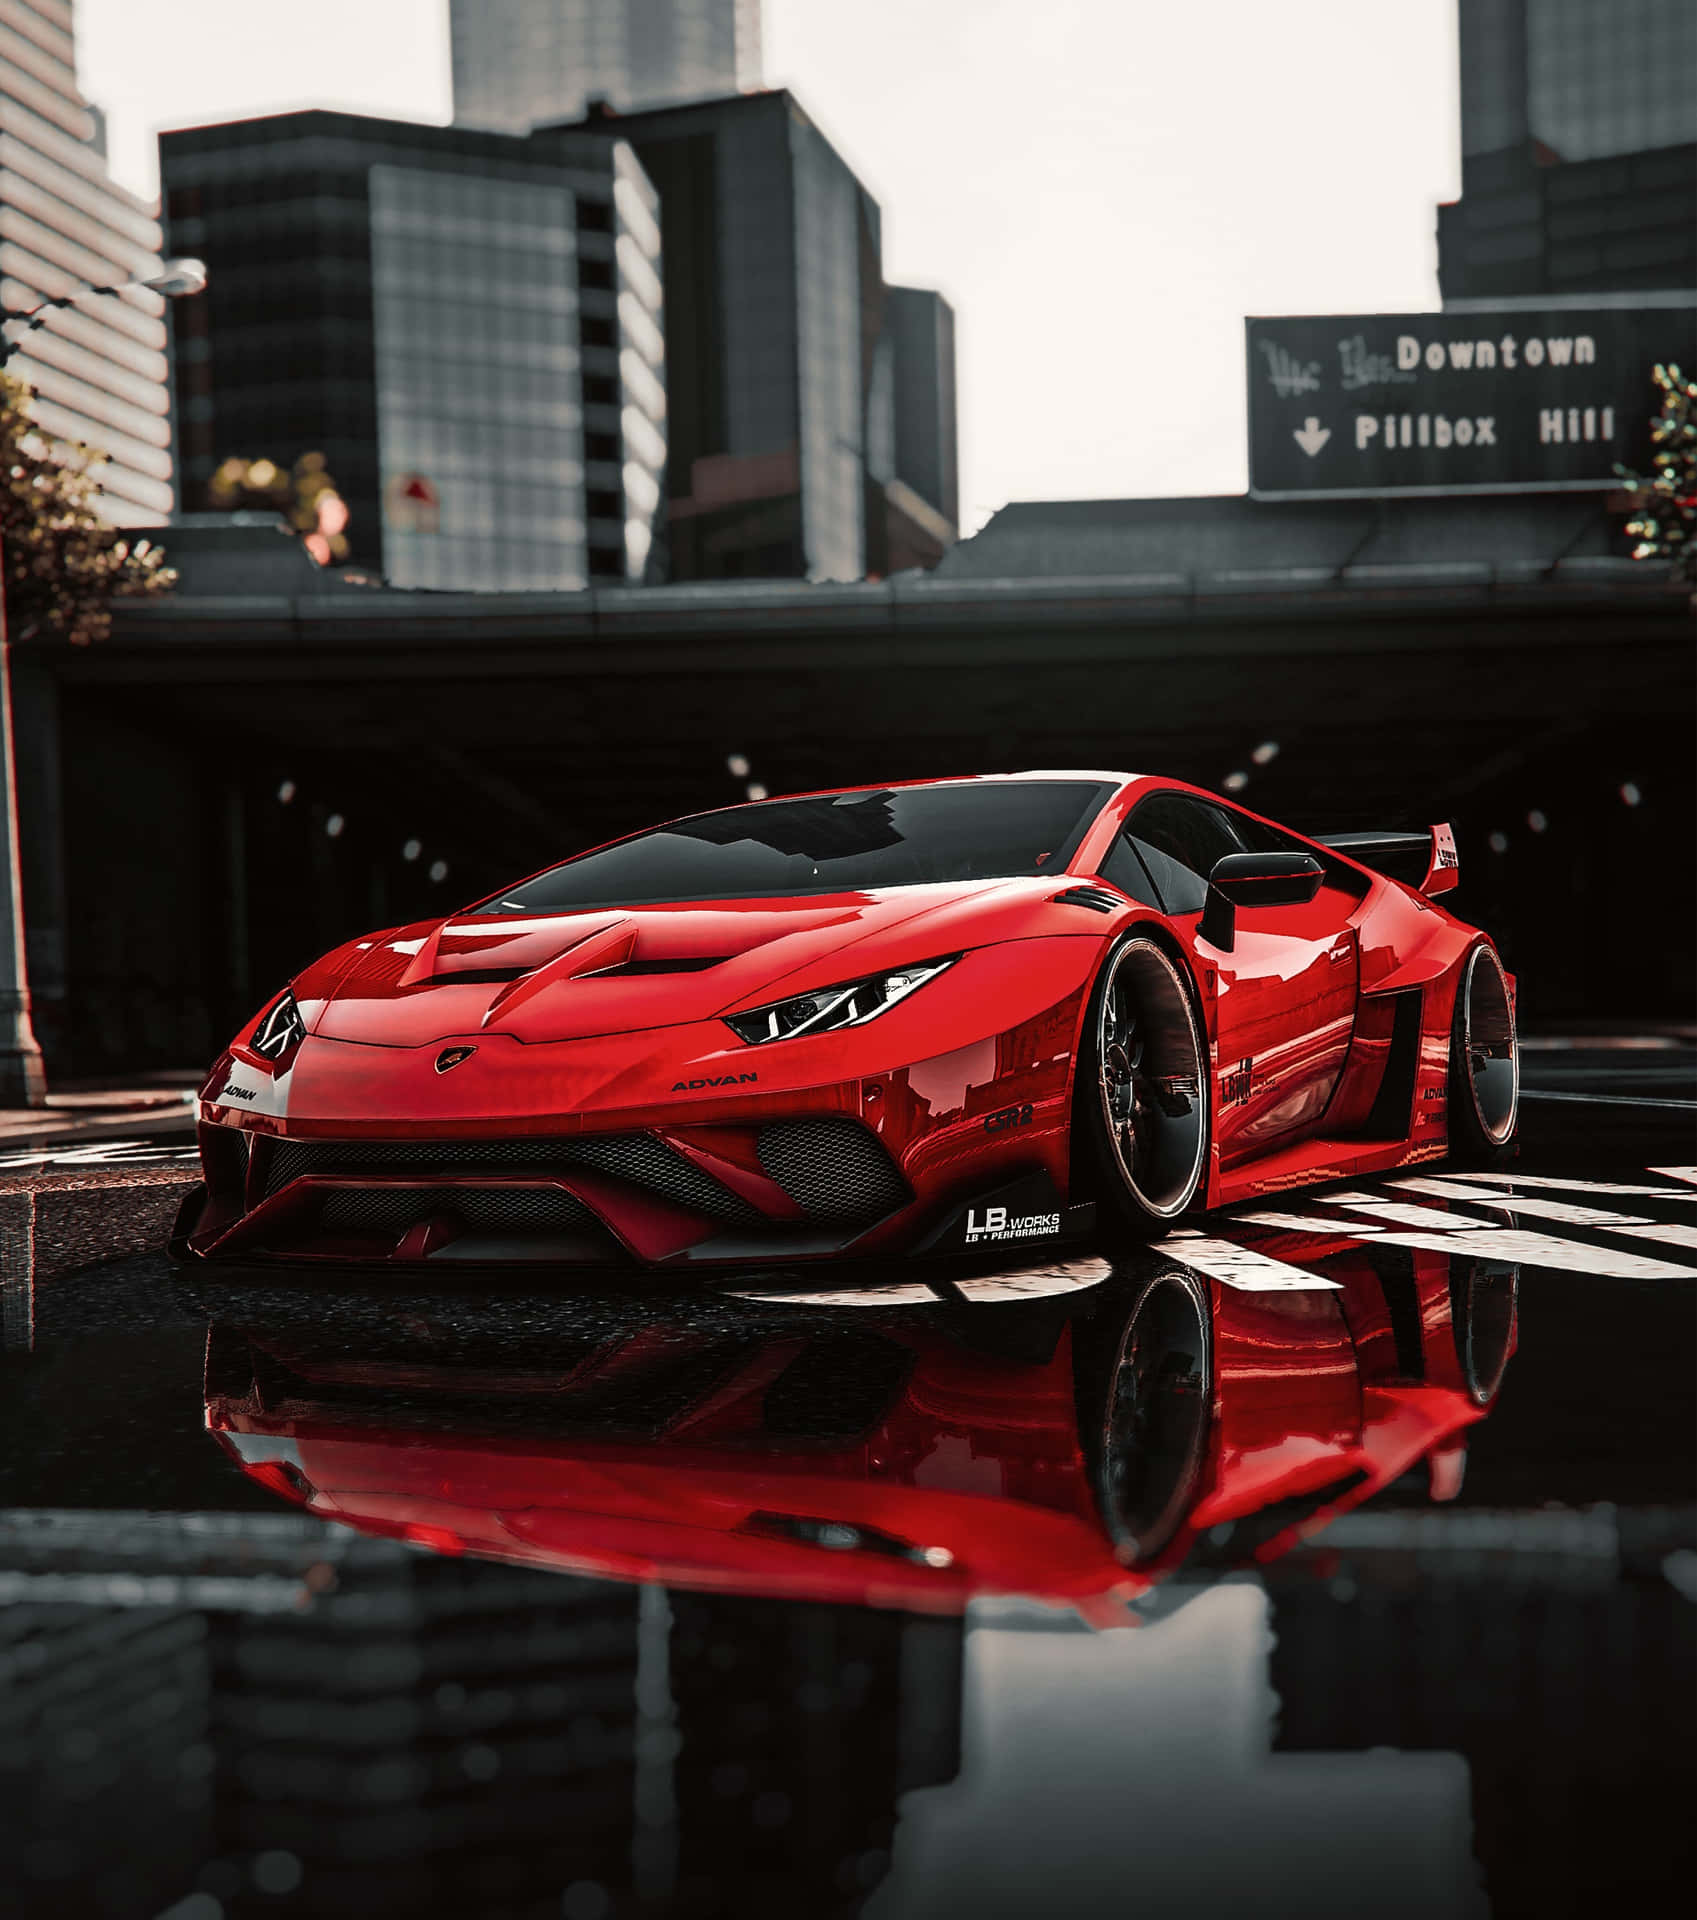 Sleek and Stunning Lamborghini Silhouette in Action Wallpaper